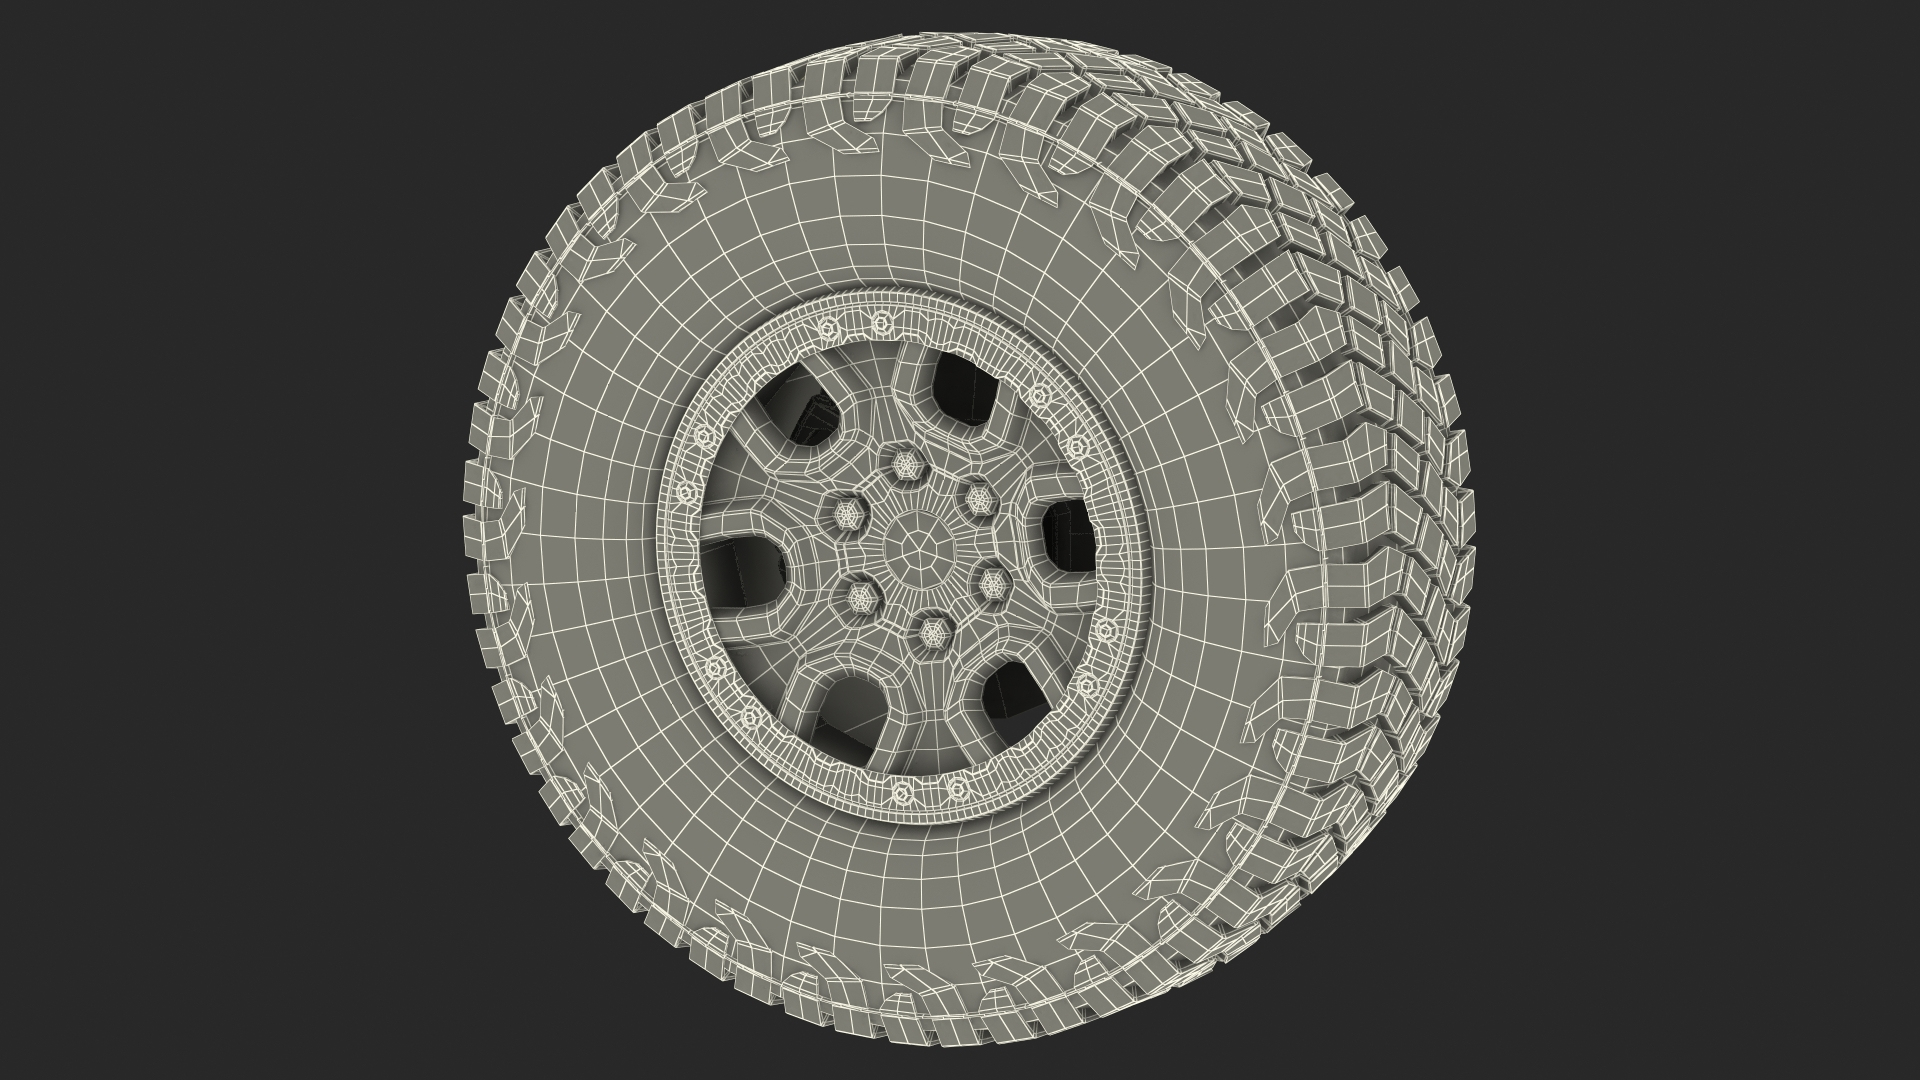 goodyear tire texture